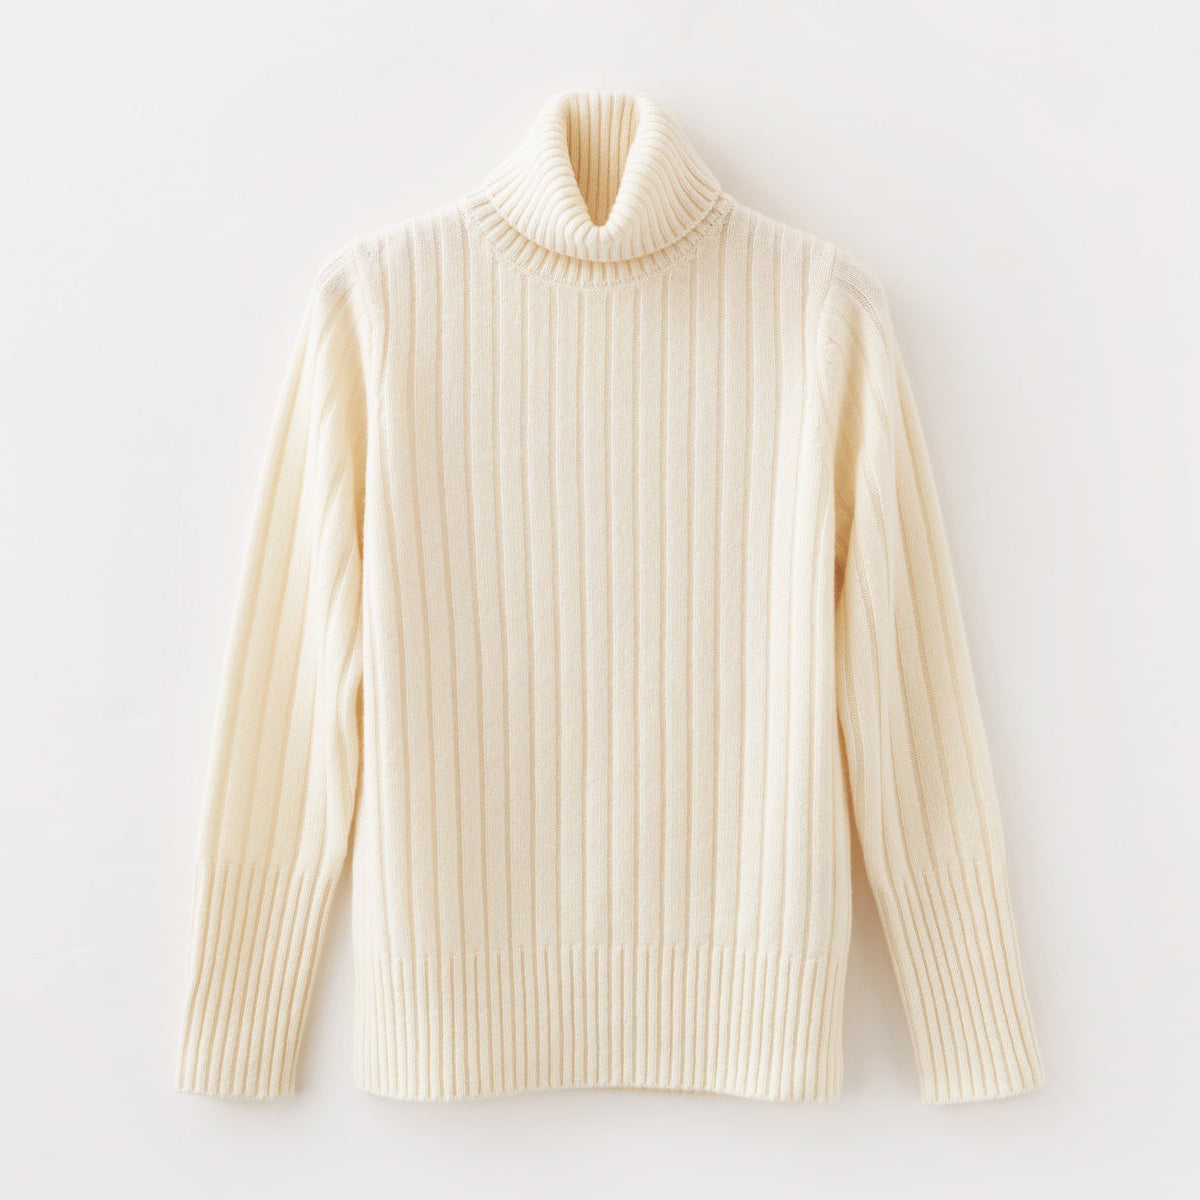 Personalized custom order of women's Japanese luxury cashmere knit rib turtleneck sweater